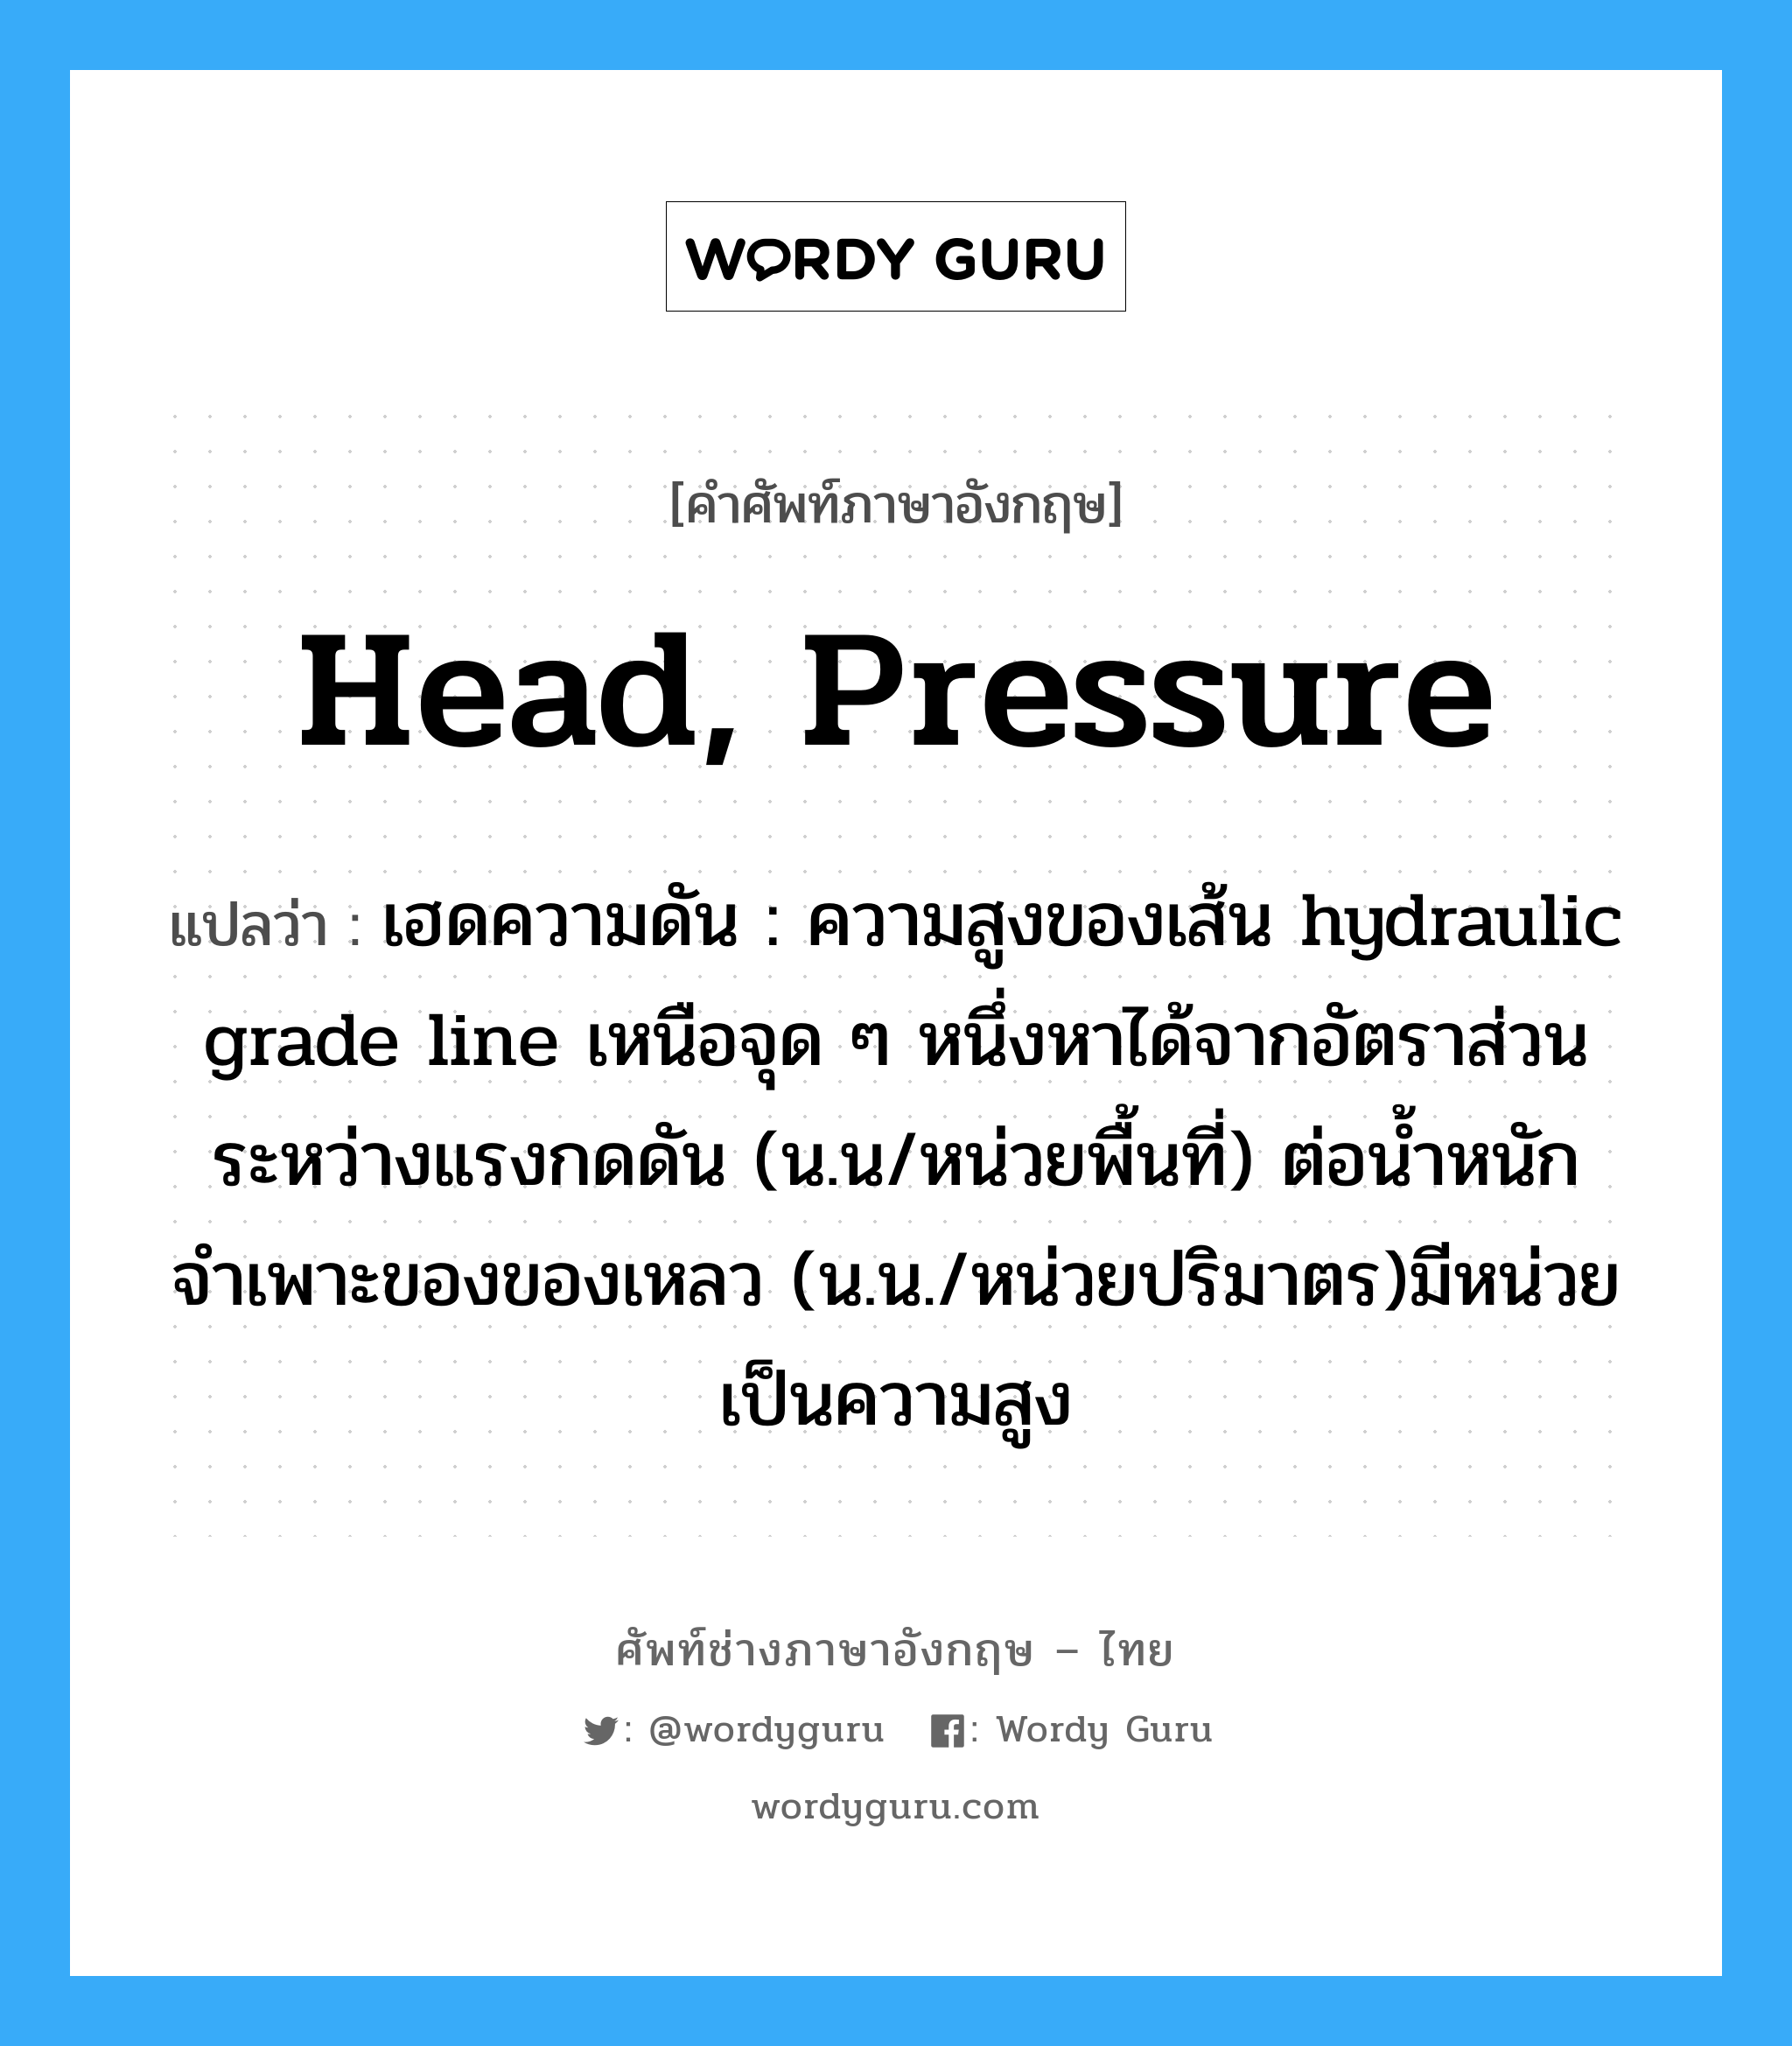 head, pressure แปลว่า?, คำศัพท์ช่างภาษาอังกฤษ - ไทย head, pressure คำศัพท์ภาษาอังกฤษ head, pressure แปลว่า เฮดความดัน : ความสูงของเส้น hydraulic grade line เหนือจุด ๆ หนึ่งหาได้จากอัตราส่วนระหว่างแรงกดดัน (น.น/หน่วยพื้นที่) ต่อน้ำหนักจำเพาะของของเหลว (น.น./หน่วยปริมาตร)มีหน่วยเป็นความสูง